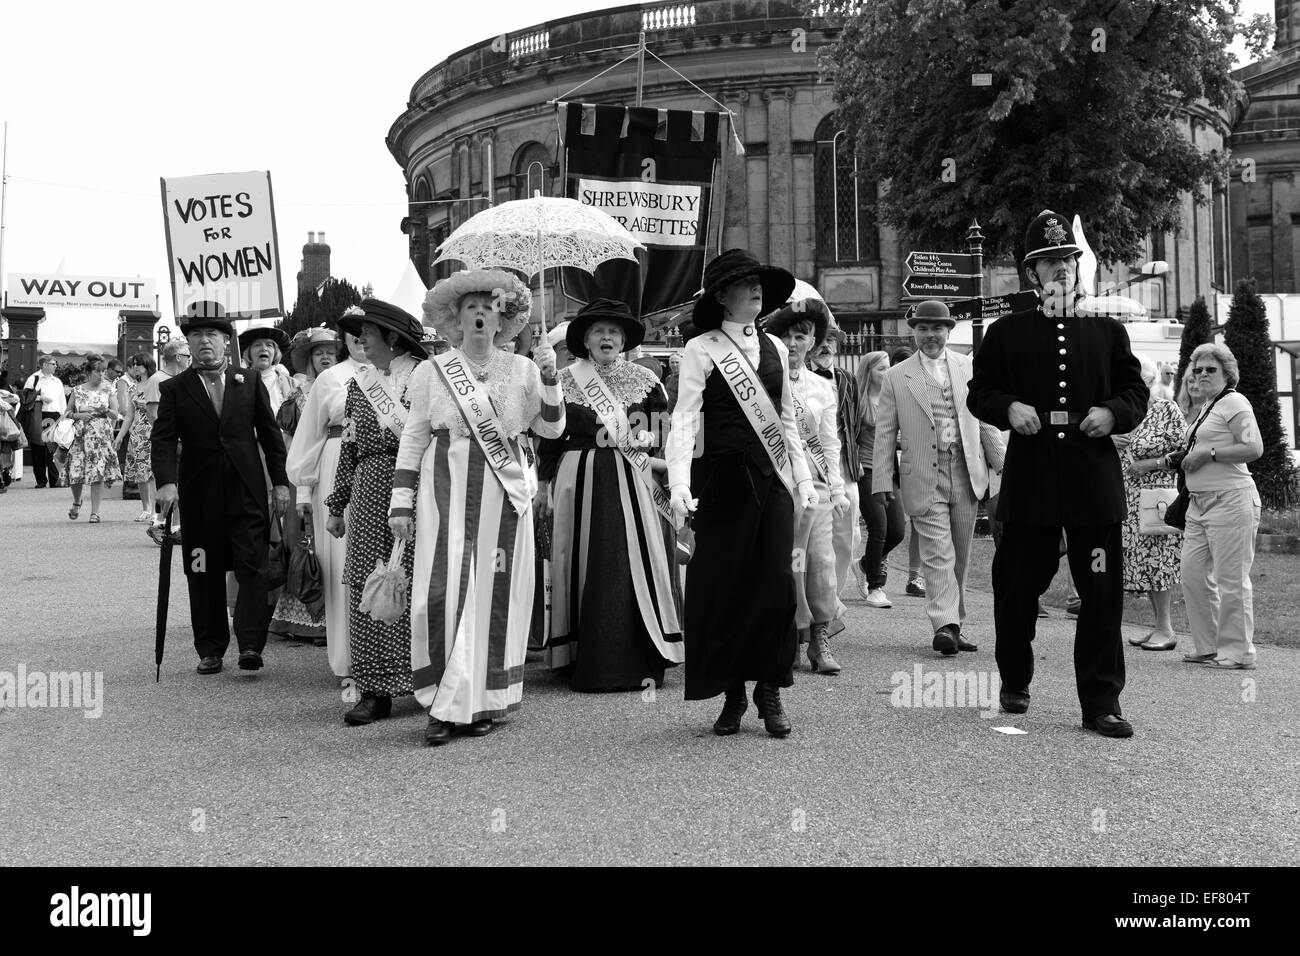 Suffragette suffragettes reenactment protest march Shrewsbury Flower Show 2014 Stock Photo